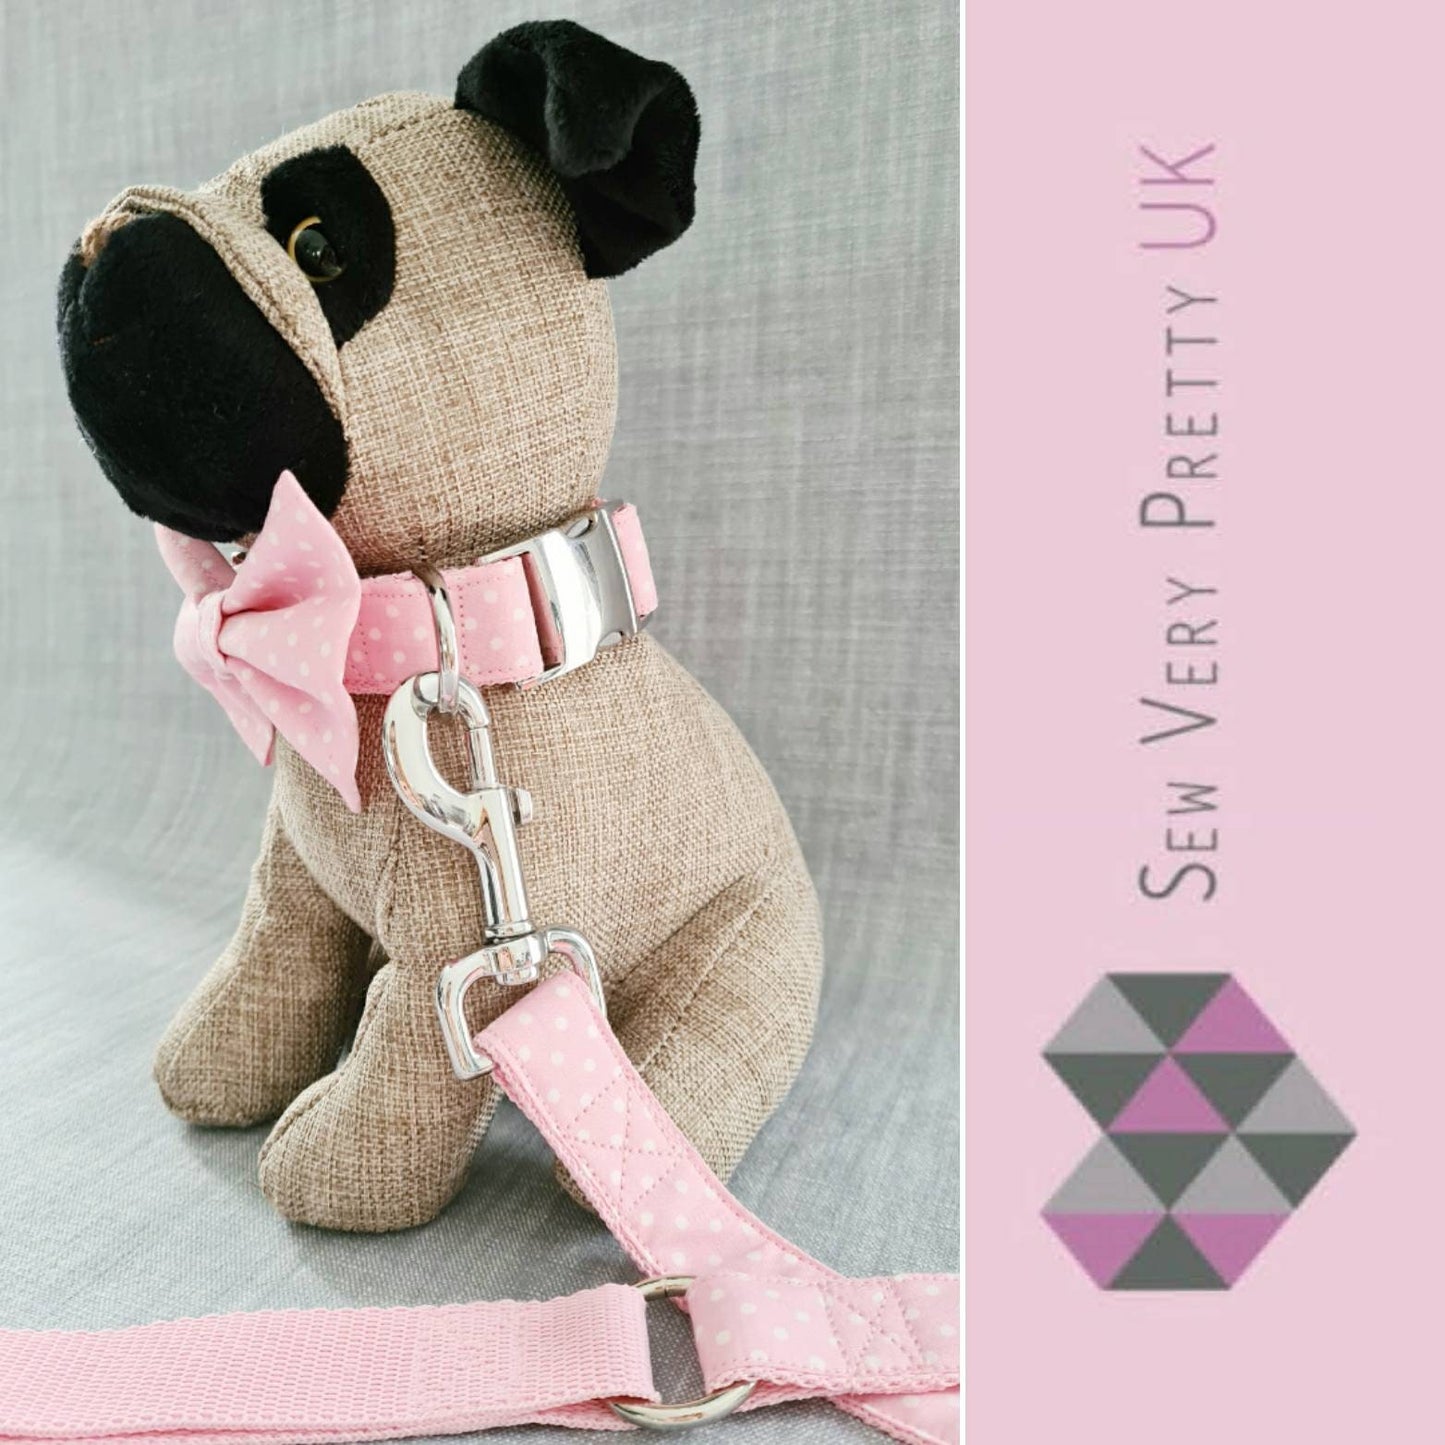 Pink polka dot collar, lead and bow set